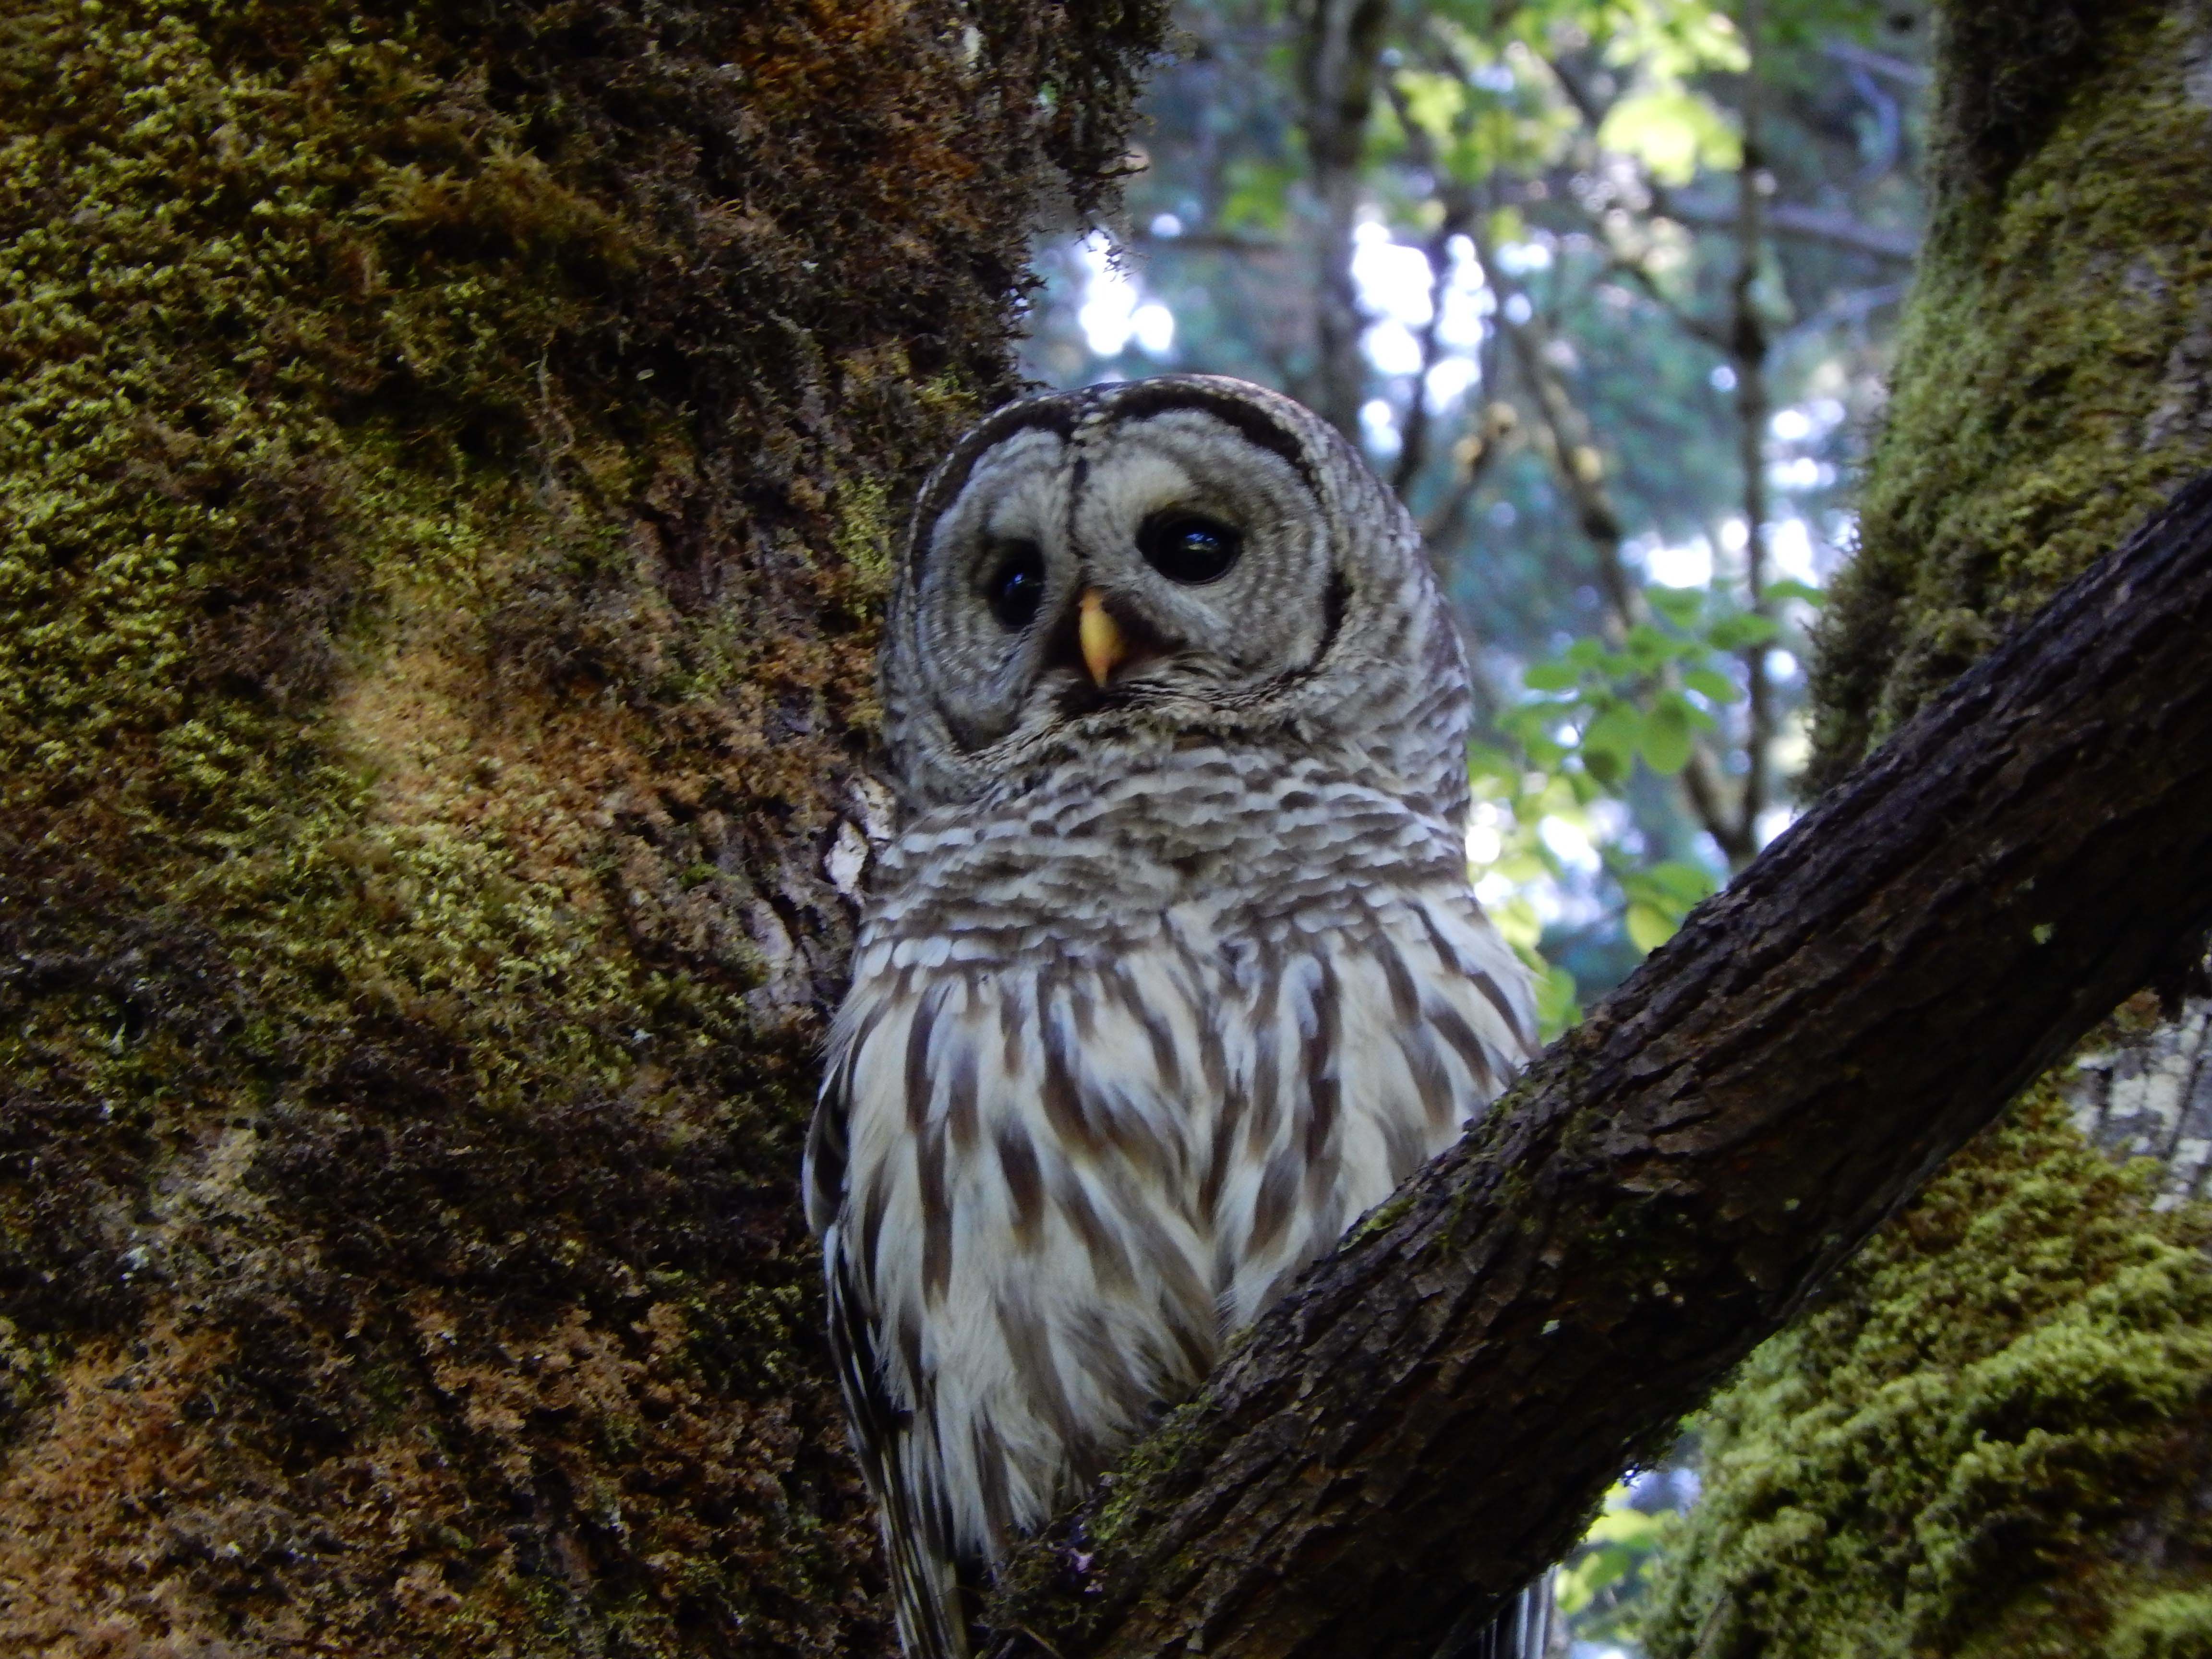 Nature Park Owl, copyright © Rosemary King